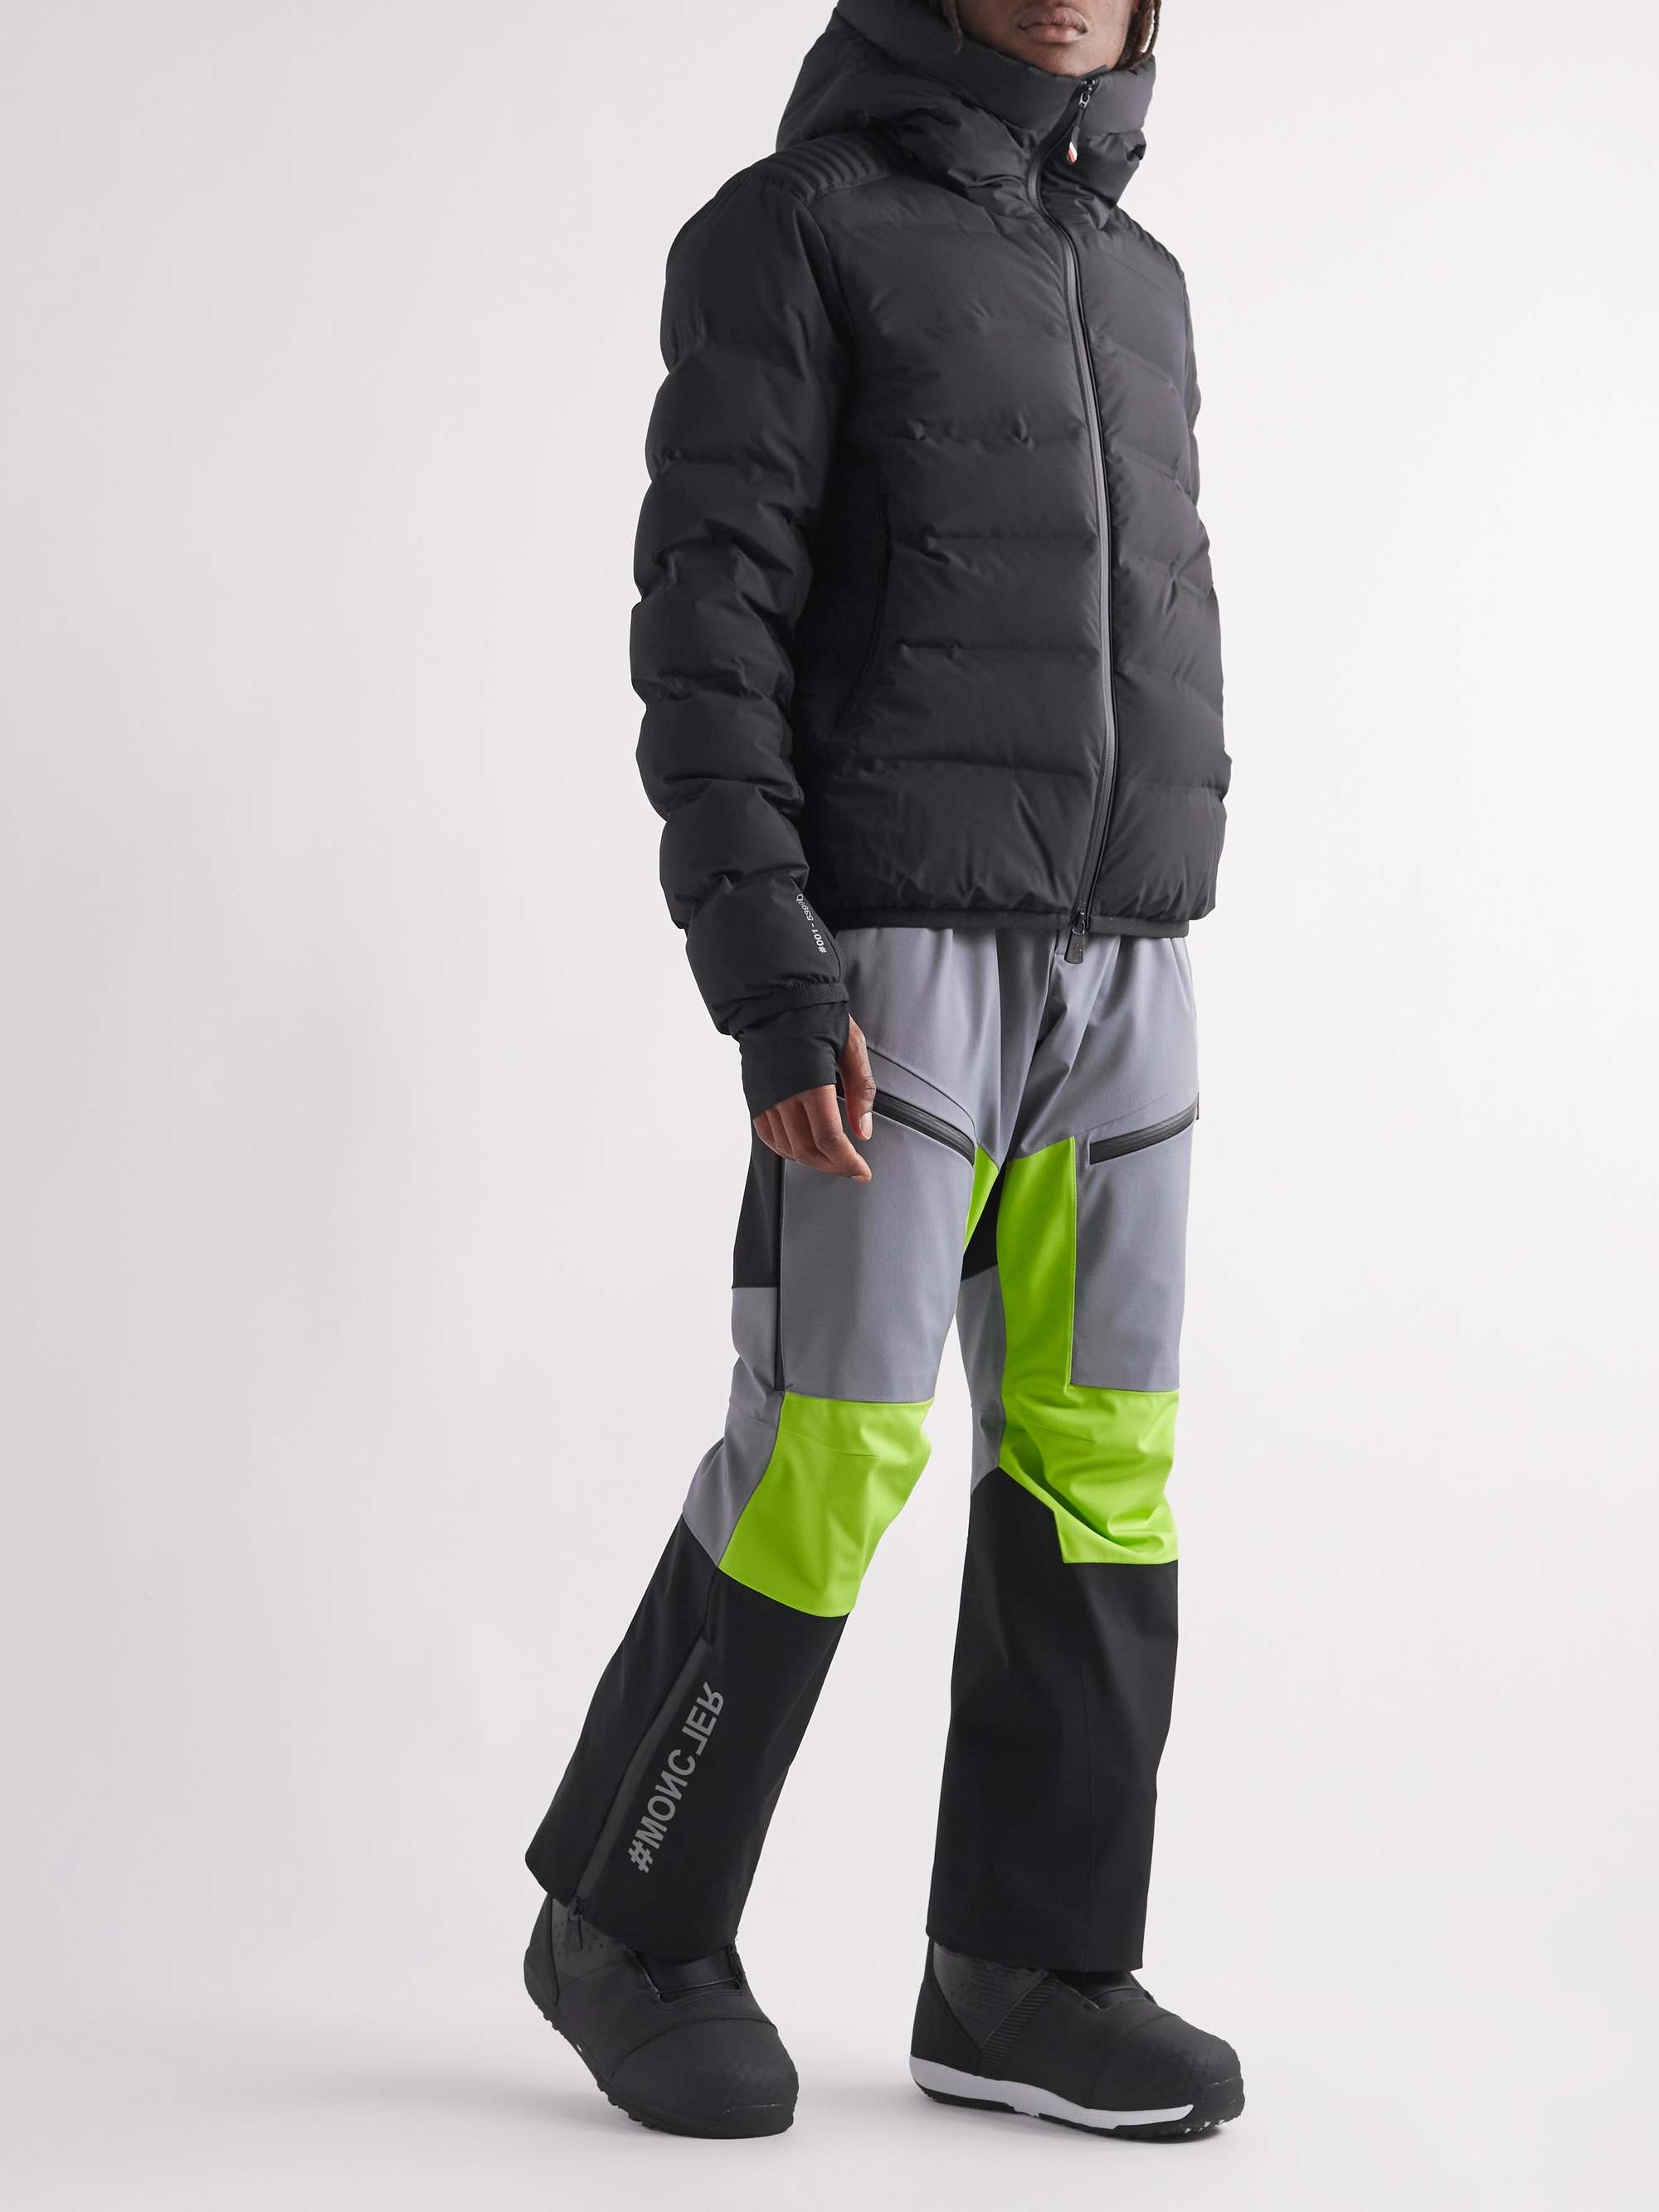 MONCLER GRENOBLE Lagorai Quilted Hooded Down Ski Jacket | MR PORTER